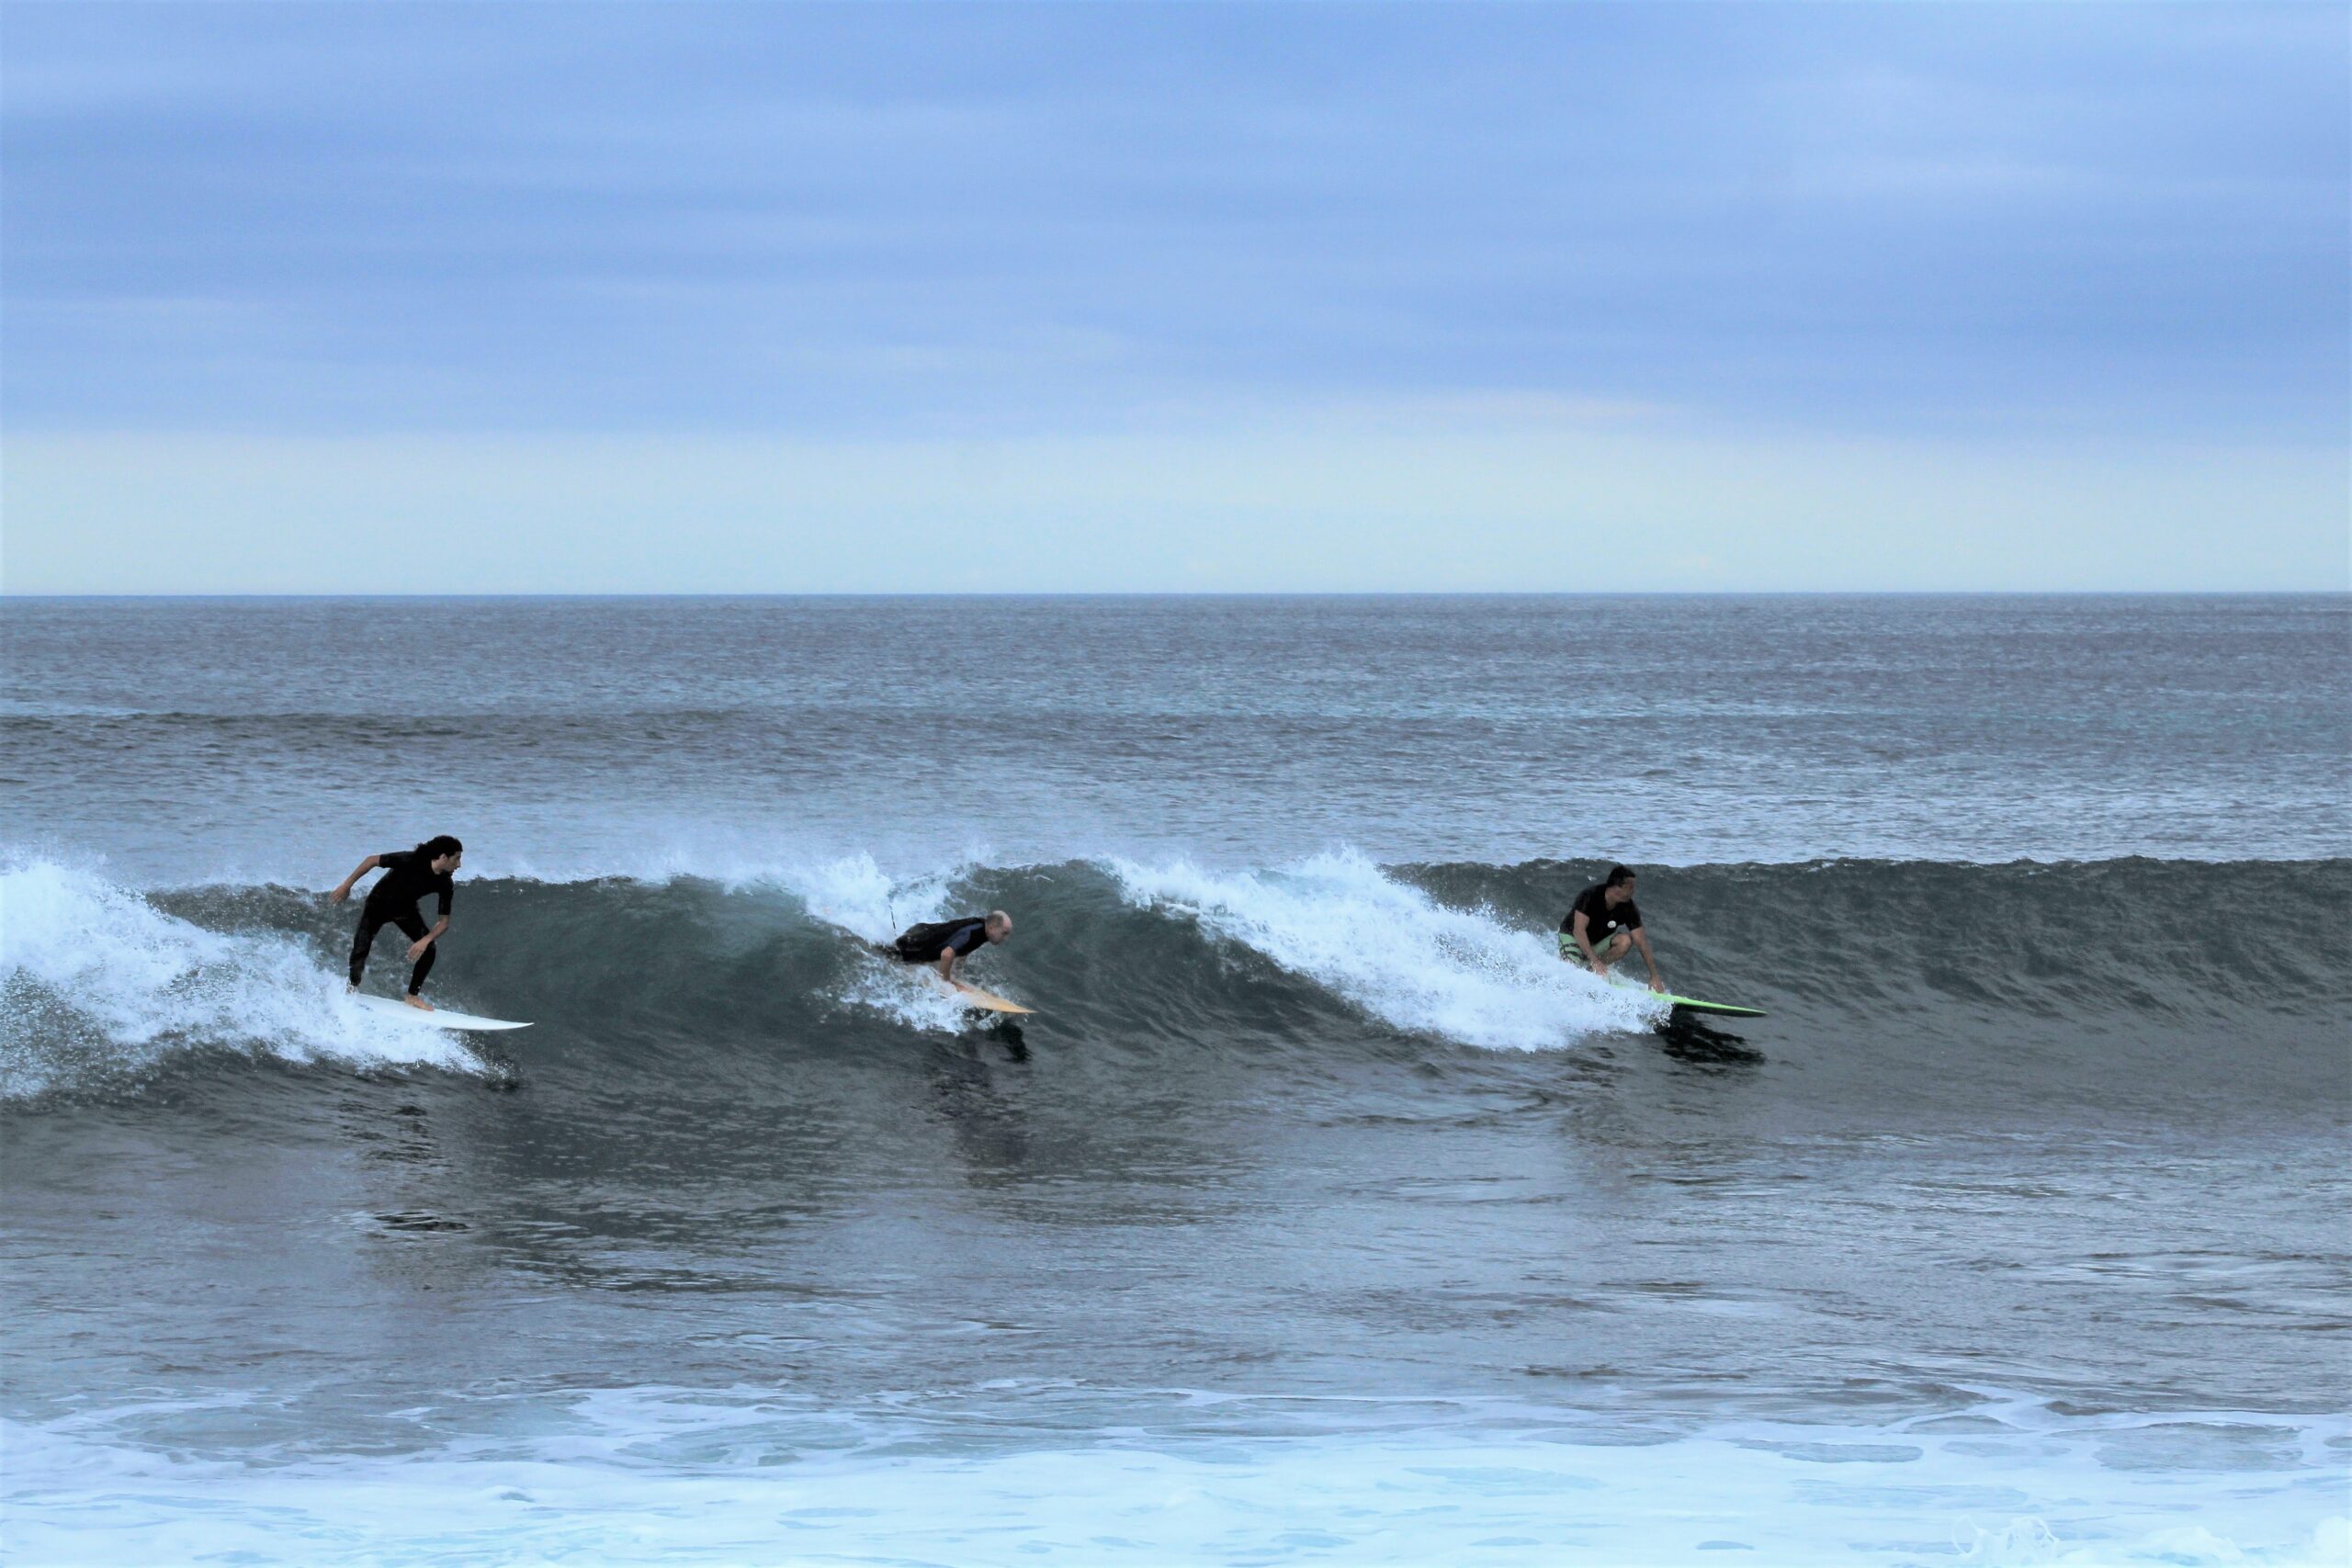 three surfers catch the same wave at El Cañon, San Cristobal, Galapagos